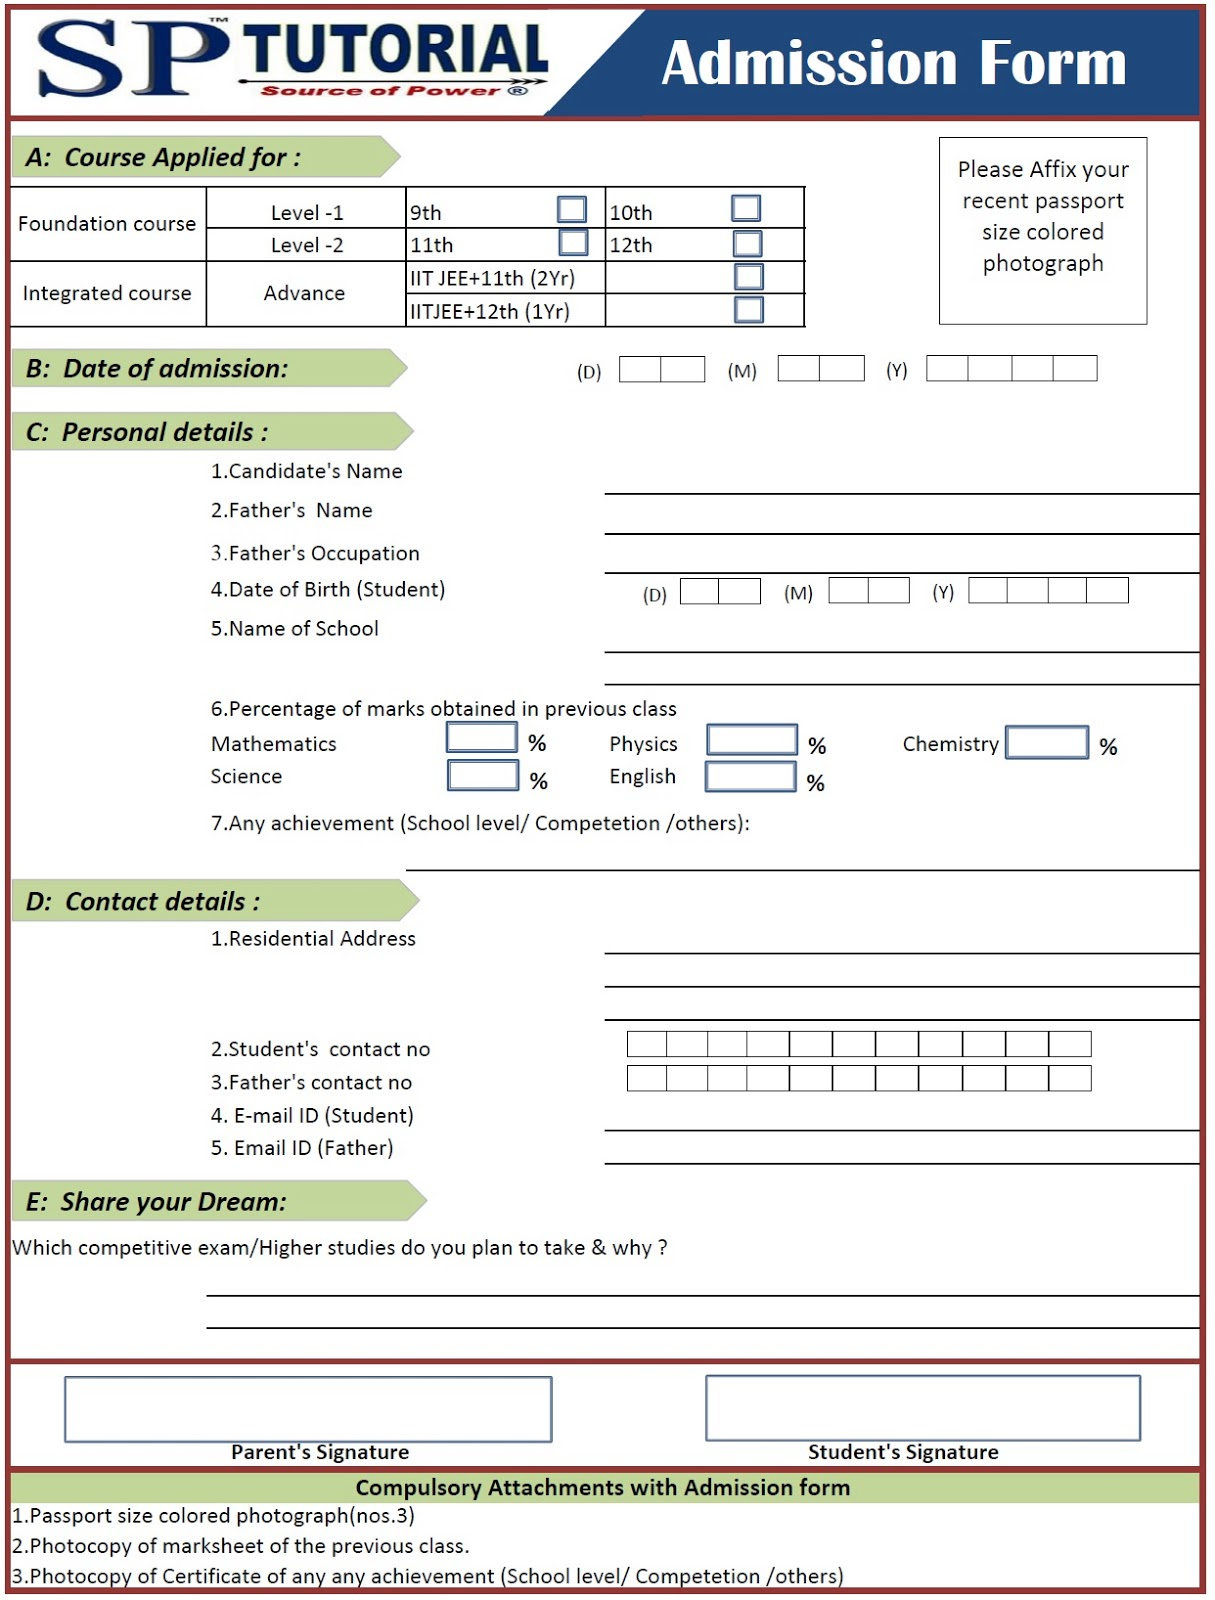 Sp College Bsc Admission Form Admission Form